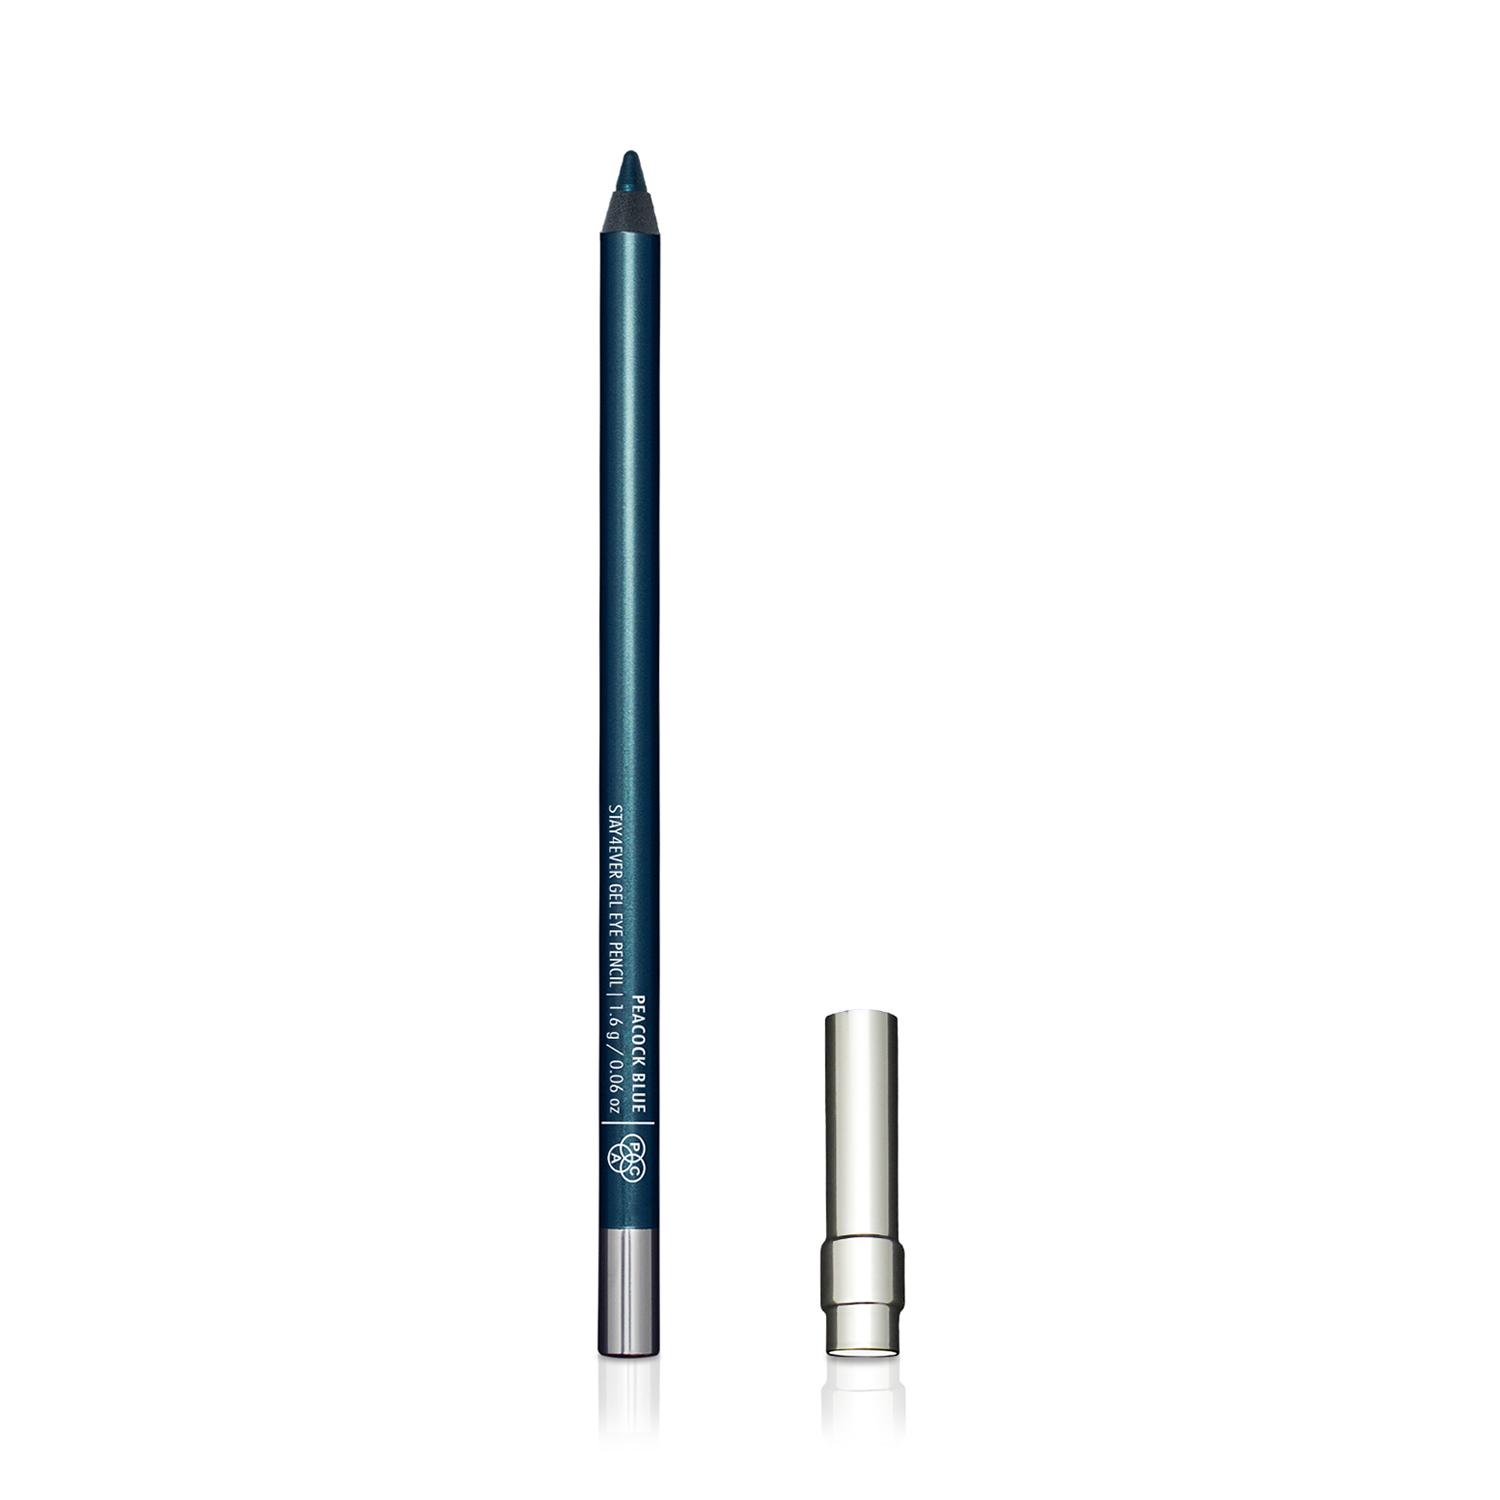 PAC | PAC Stay4Ever Gel Eye Pencil - Peacock Blue (1.6g)